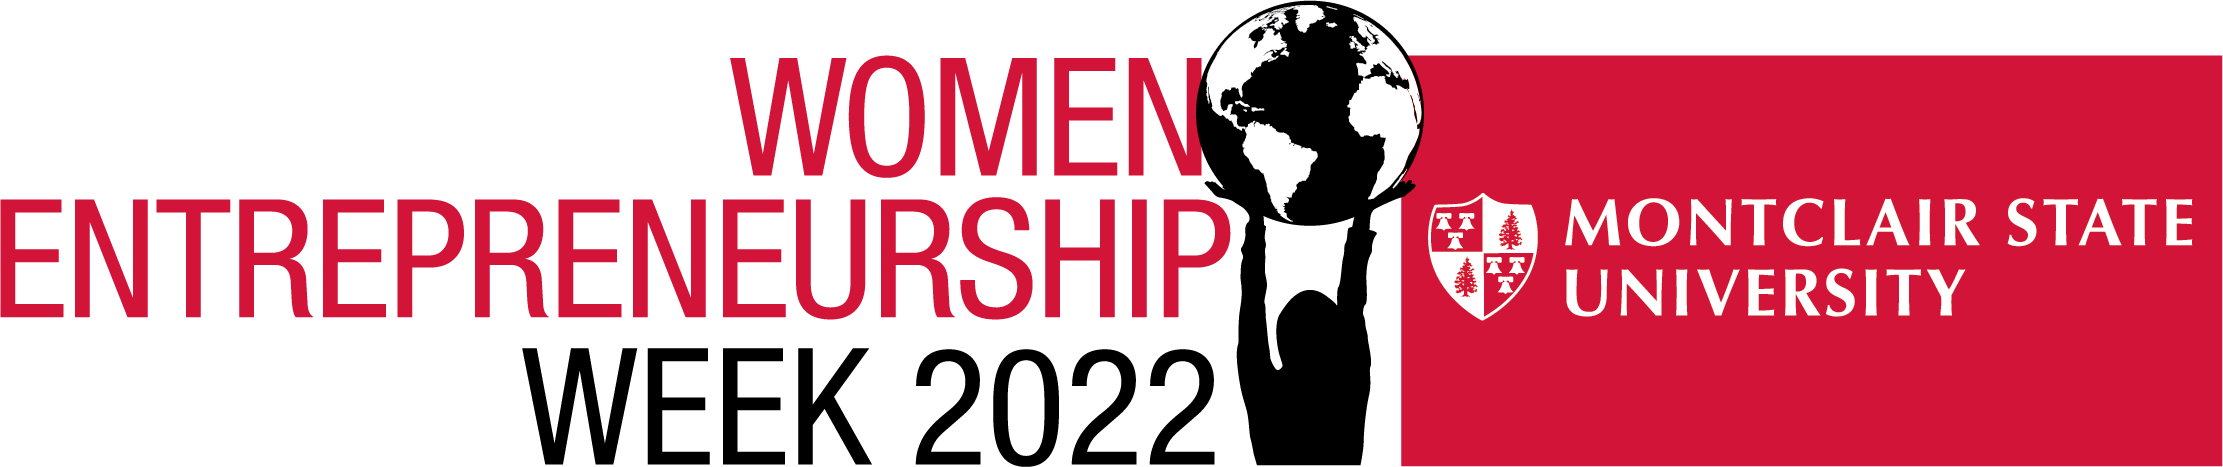 Womens Entrepreneurship week